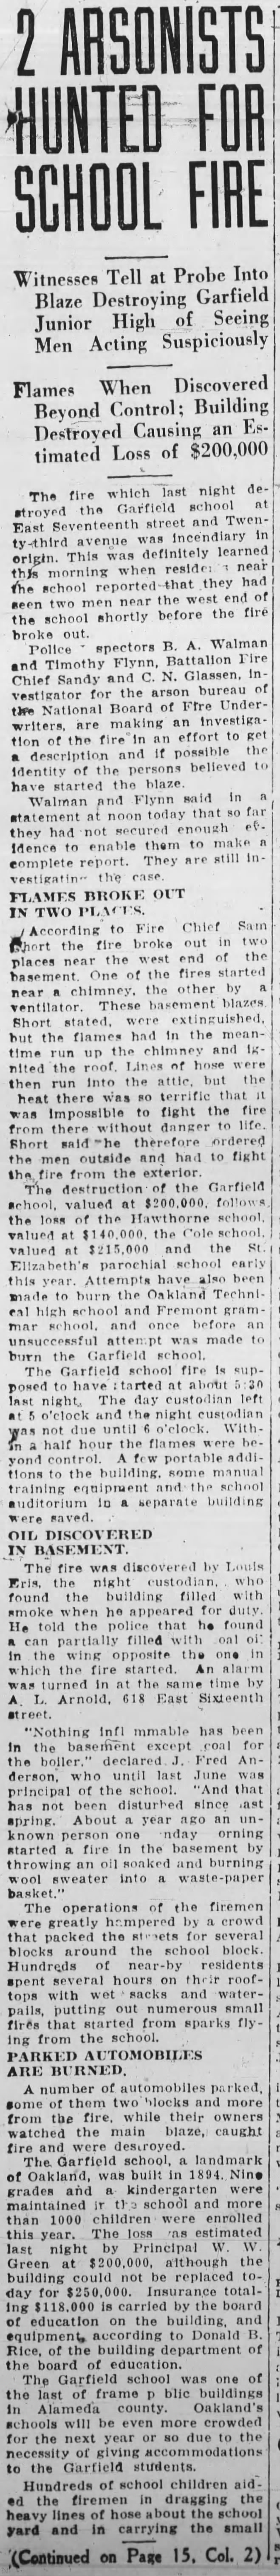 Garfield School fire (p1)